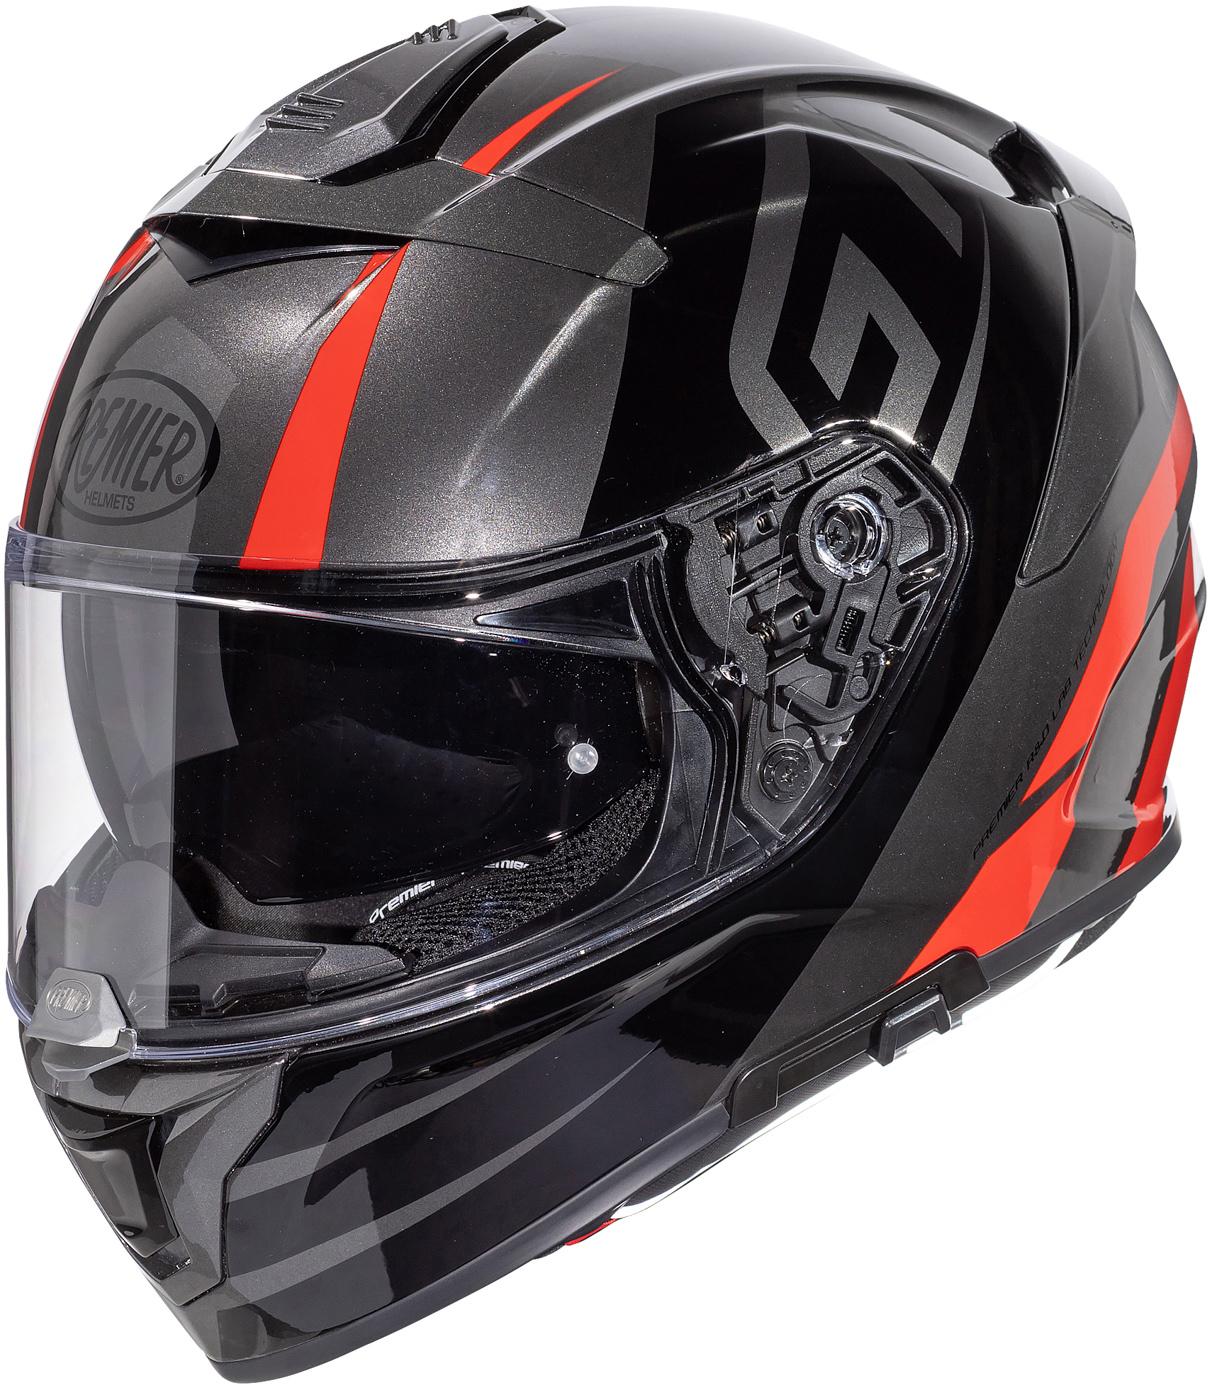 Premier Devil Gt Full Face Motorcycle Helmet - Black/Red, M